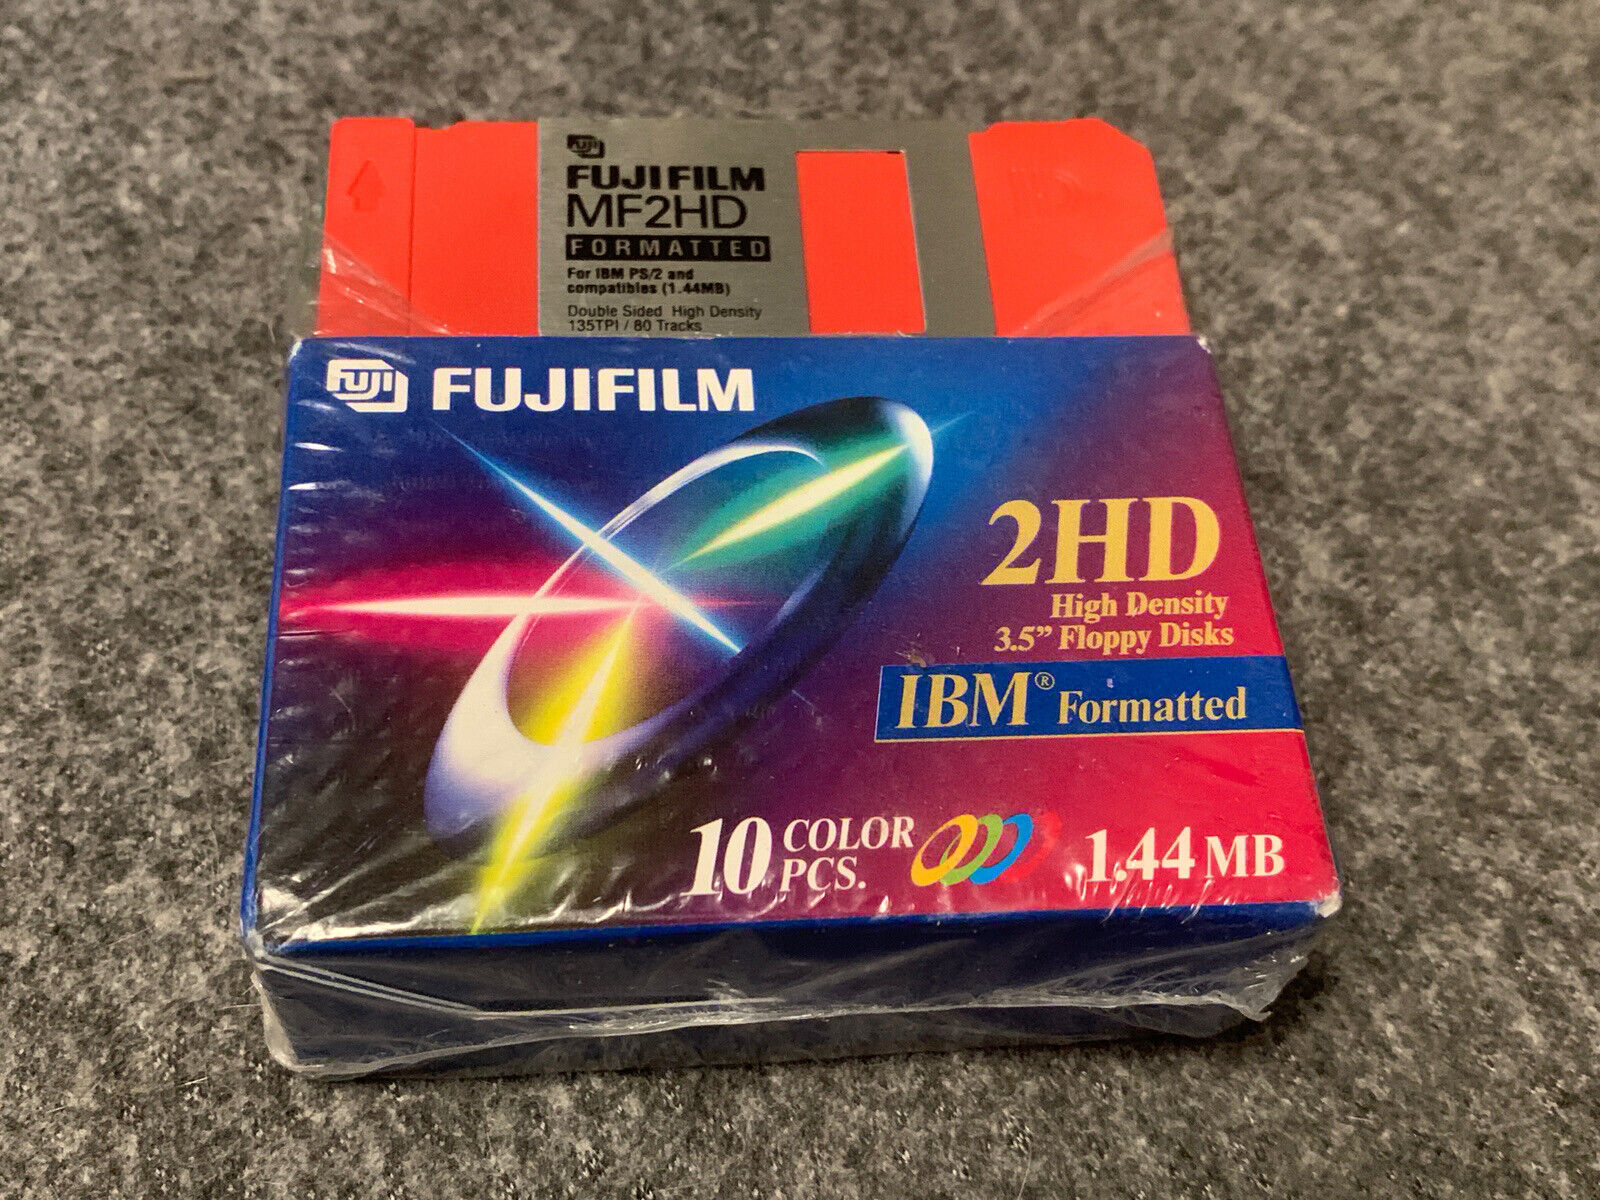 Fuji Film 2 HD 1.44 MB IBM Formatted 3.5” Floppy Discs